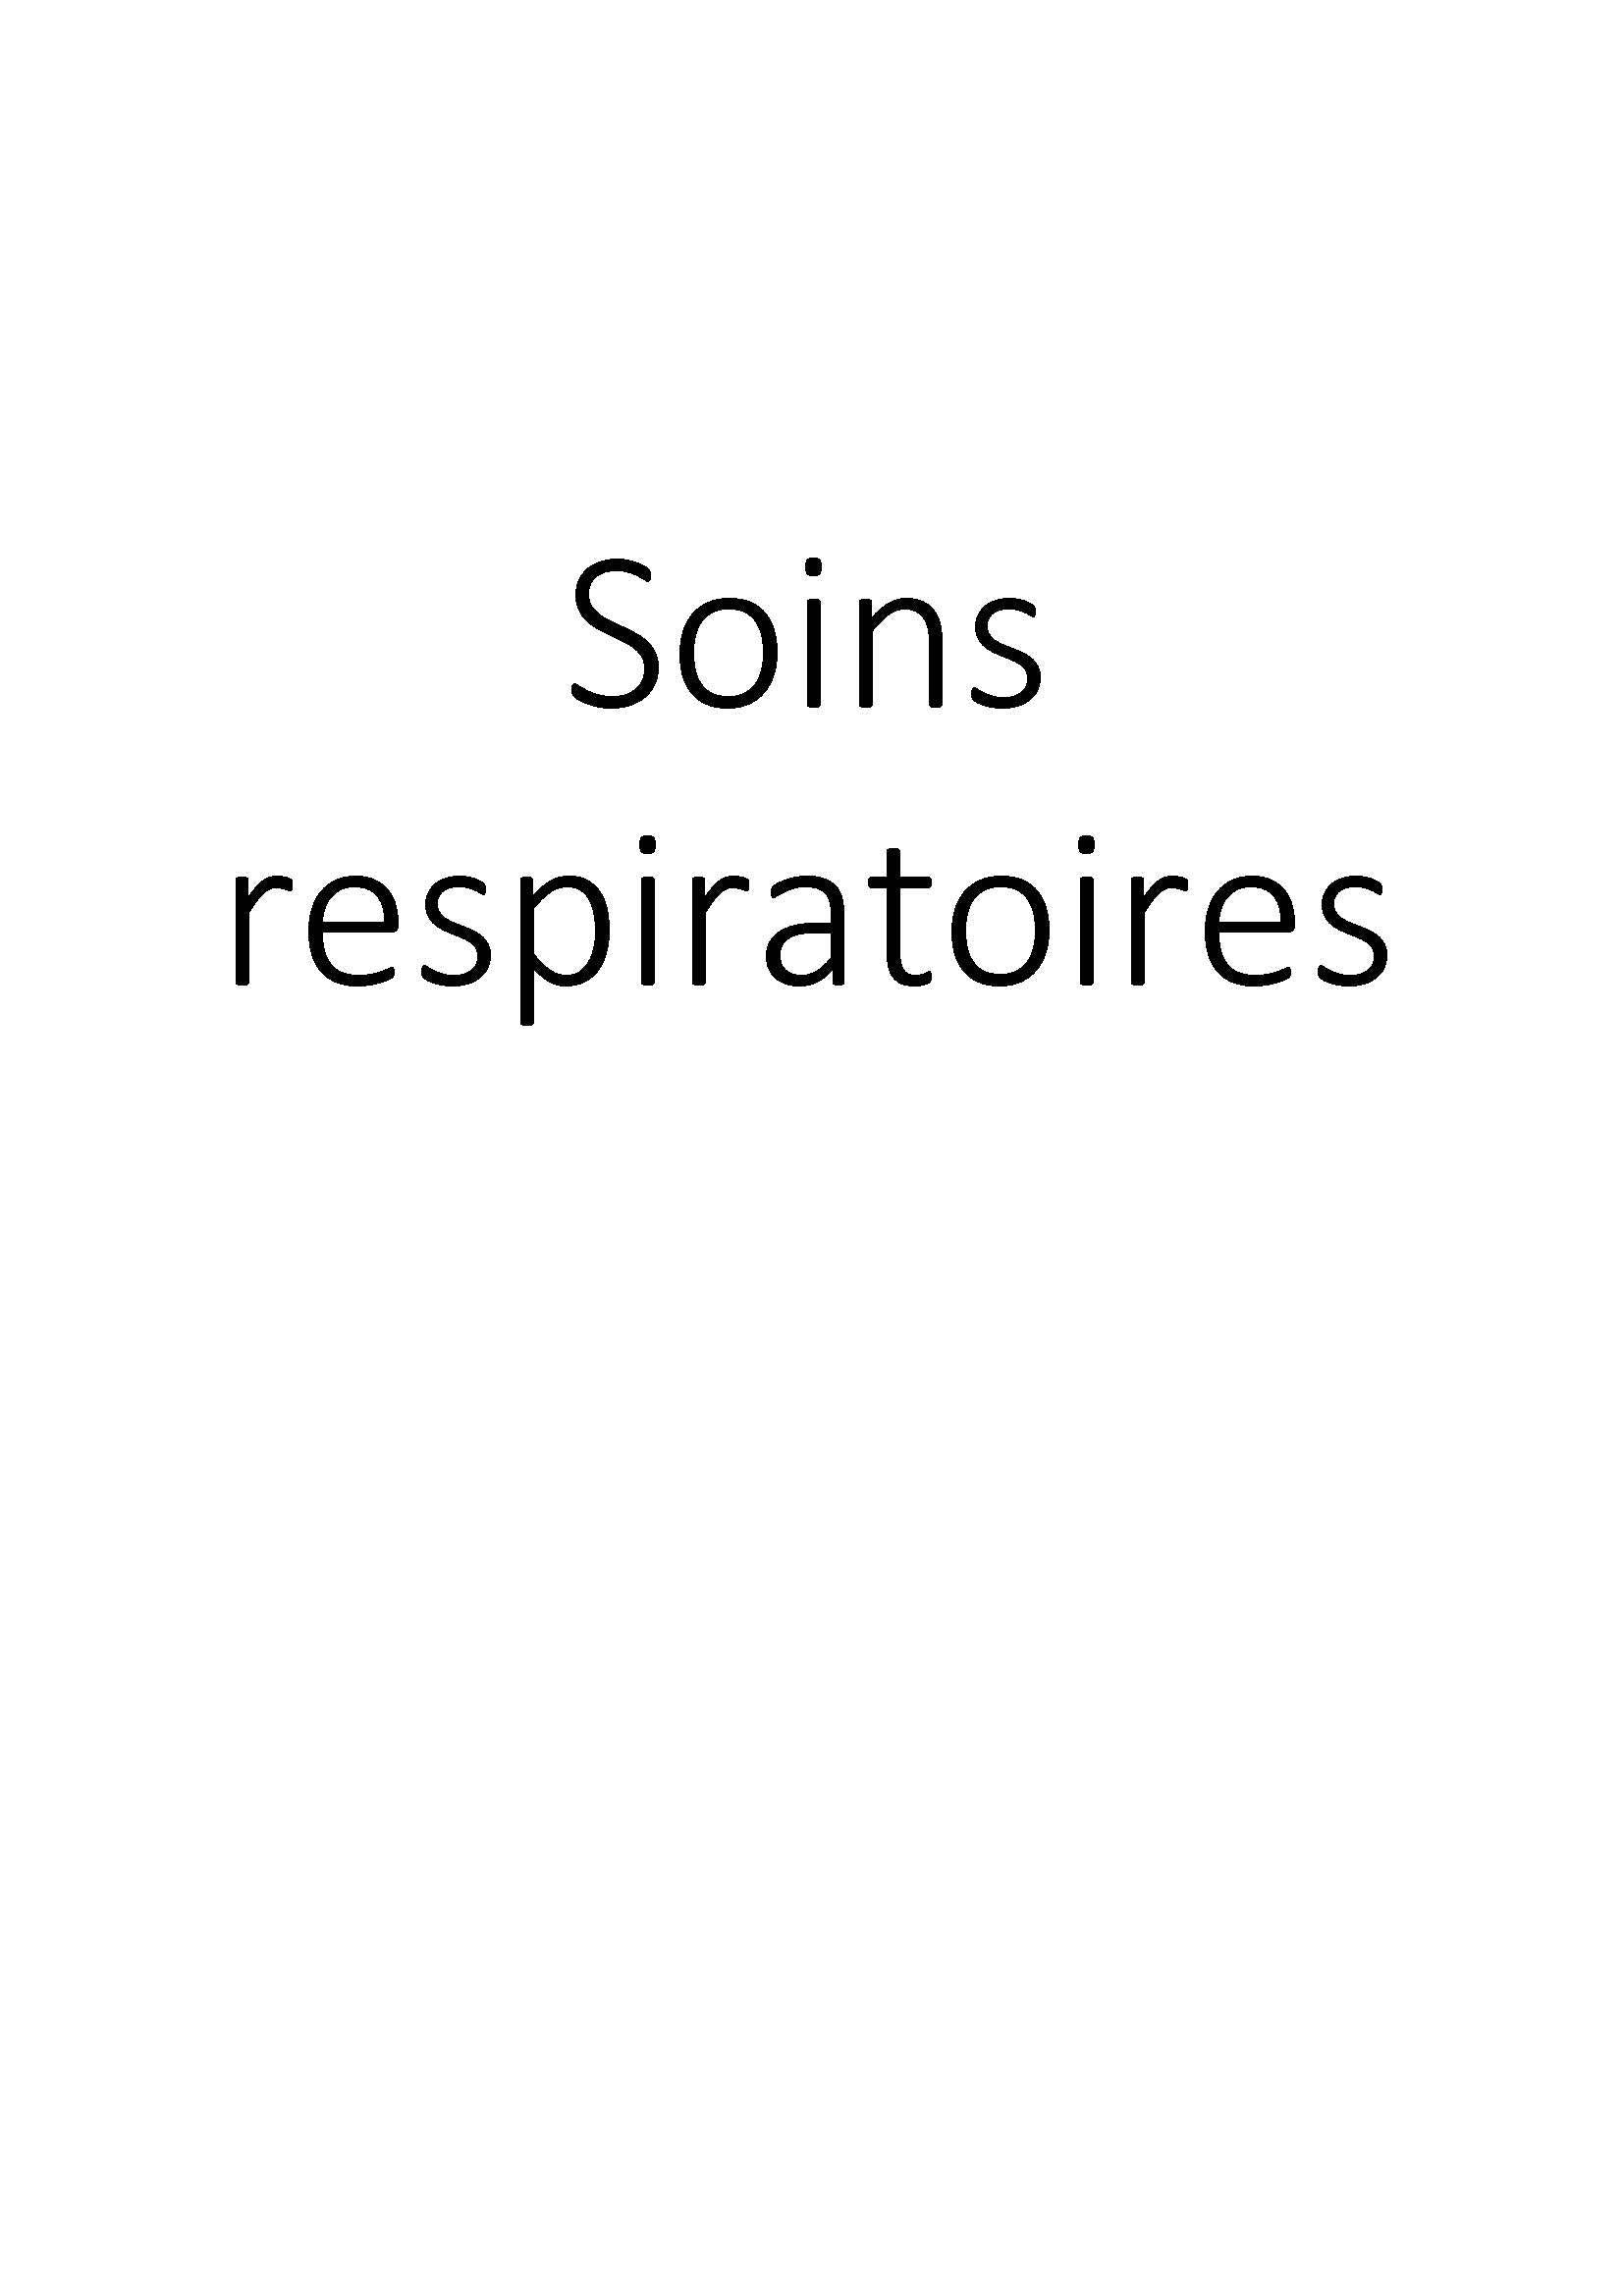 Soins respiratoires clicktofournisseur.com